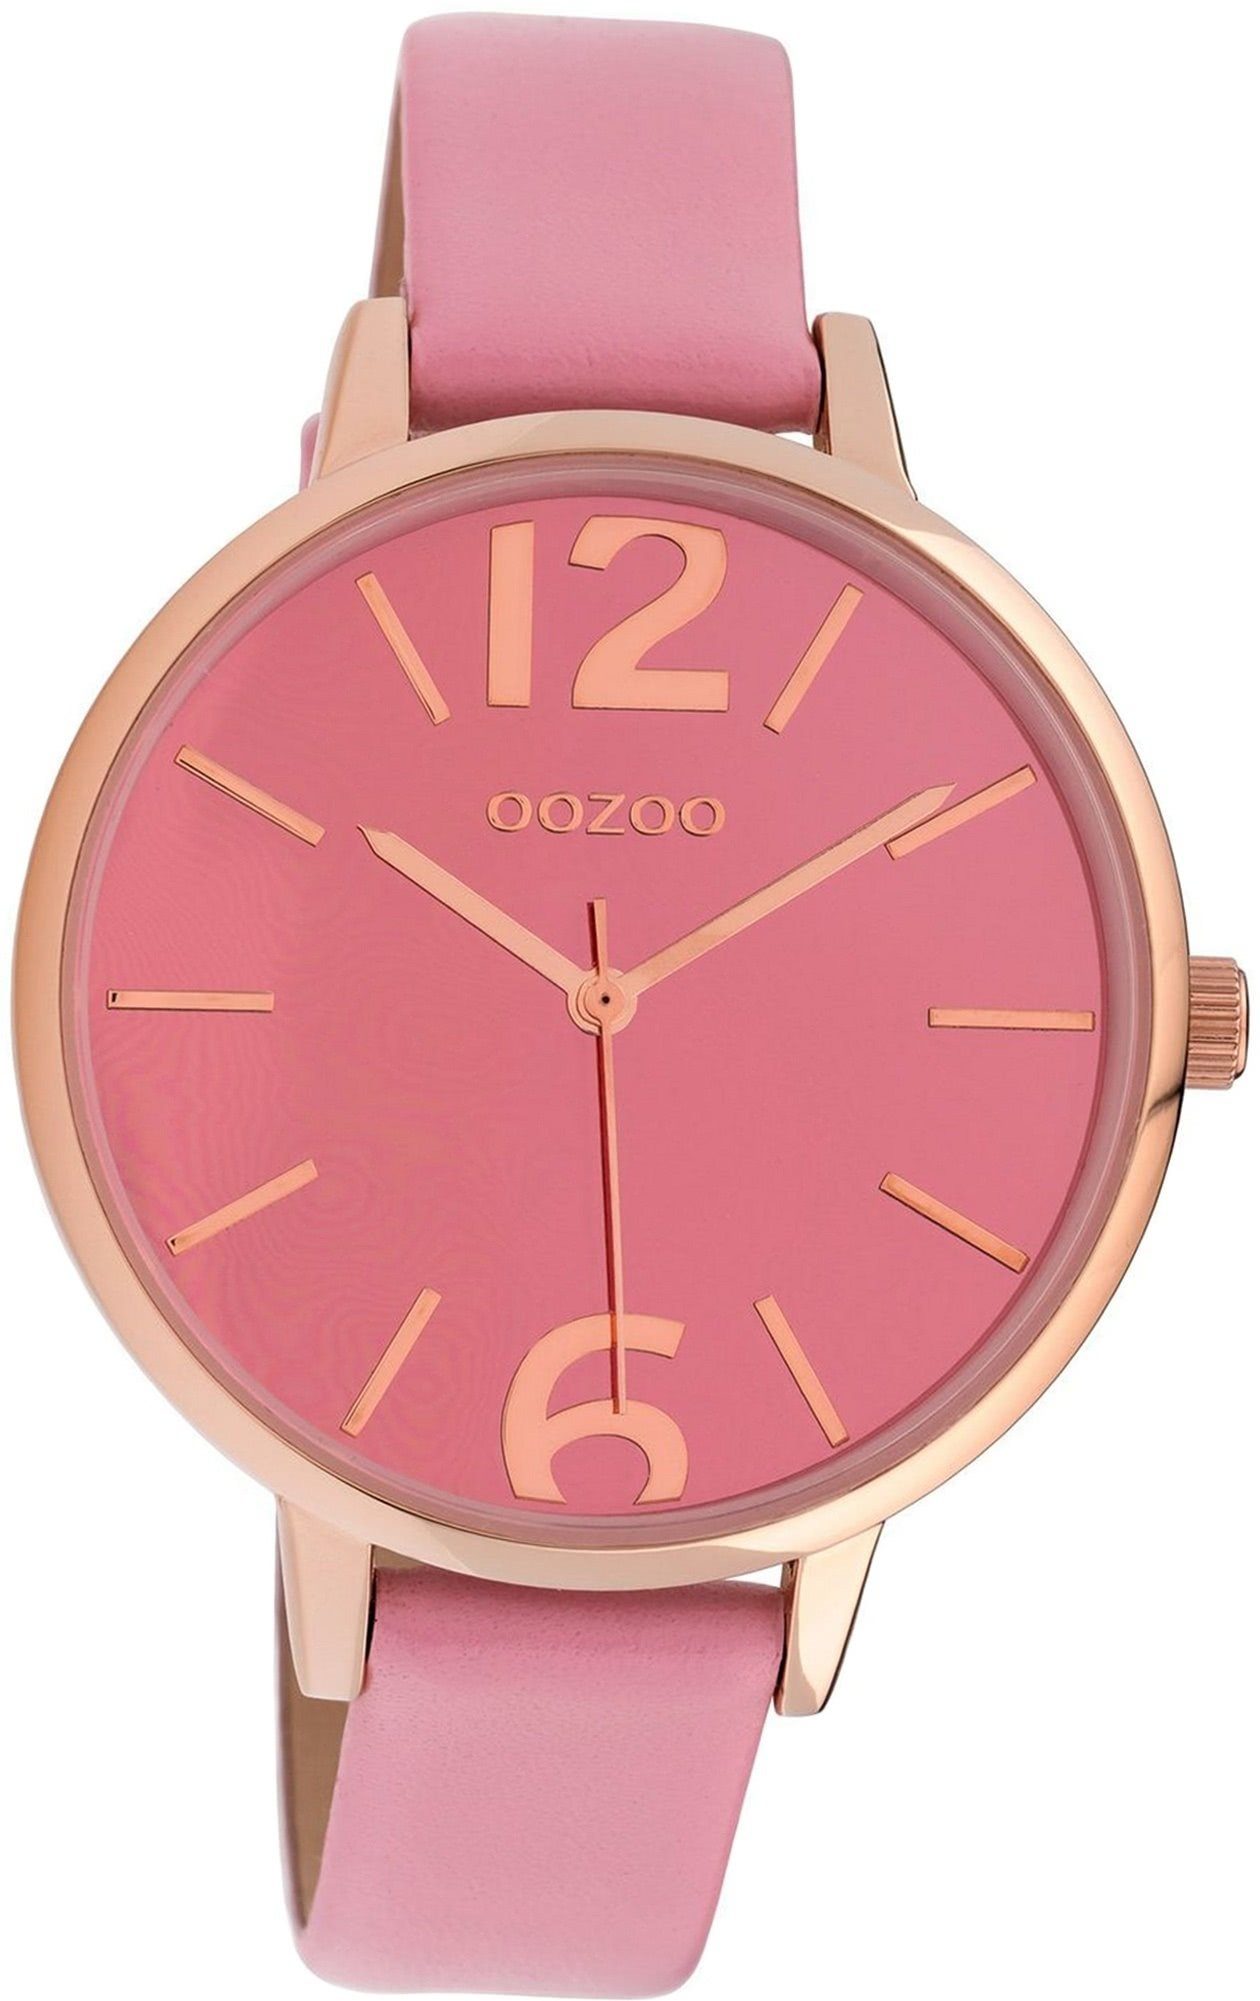 OOZOO Quarzuhr »Oozoo Leder Damen Uhr C10153 Analog«, (Analoguhr), Damenuhr  mit Lederarmband, rundes Gehäuse, groß (ca. 41mm), Fashion-Style